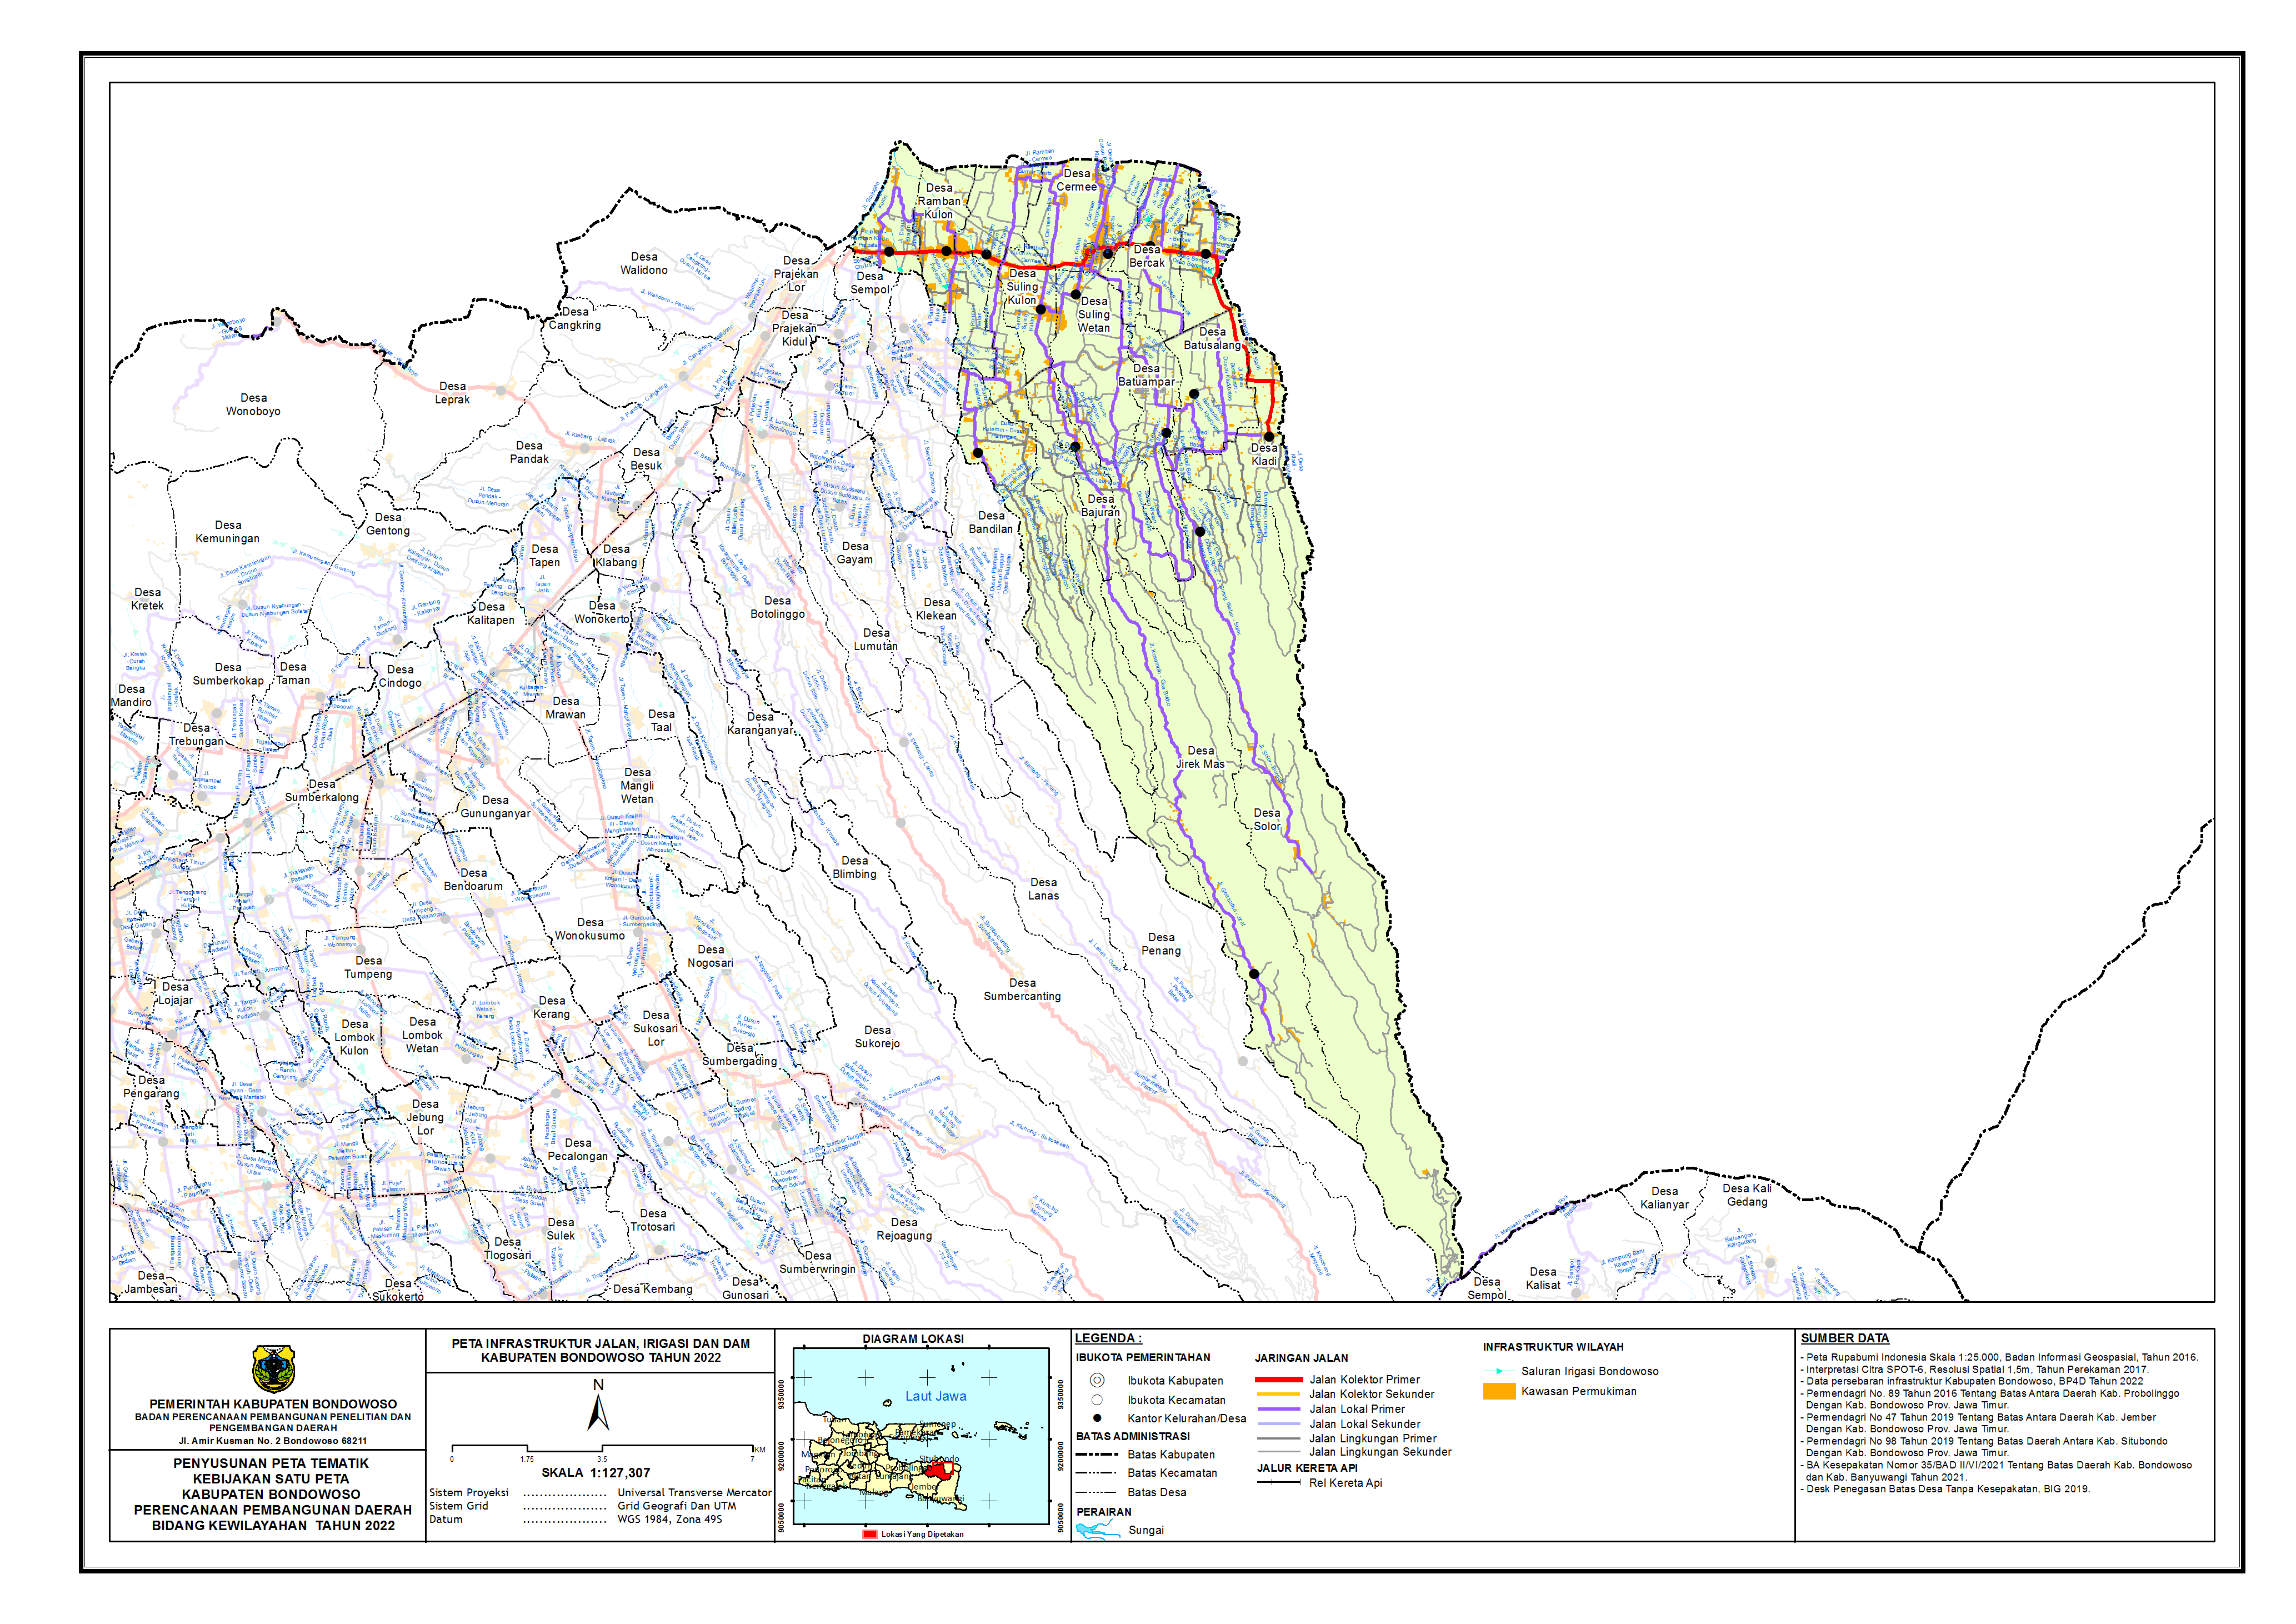 Peta Infrastruktur Wilayah Kecamatan Cermee.png